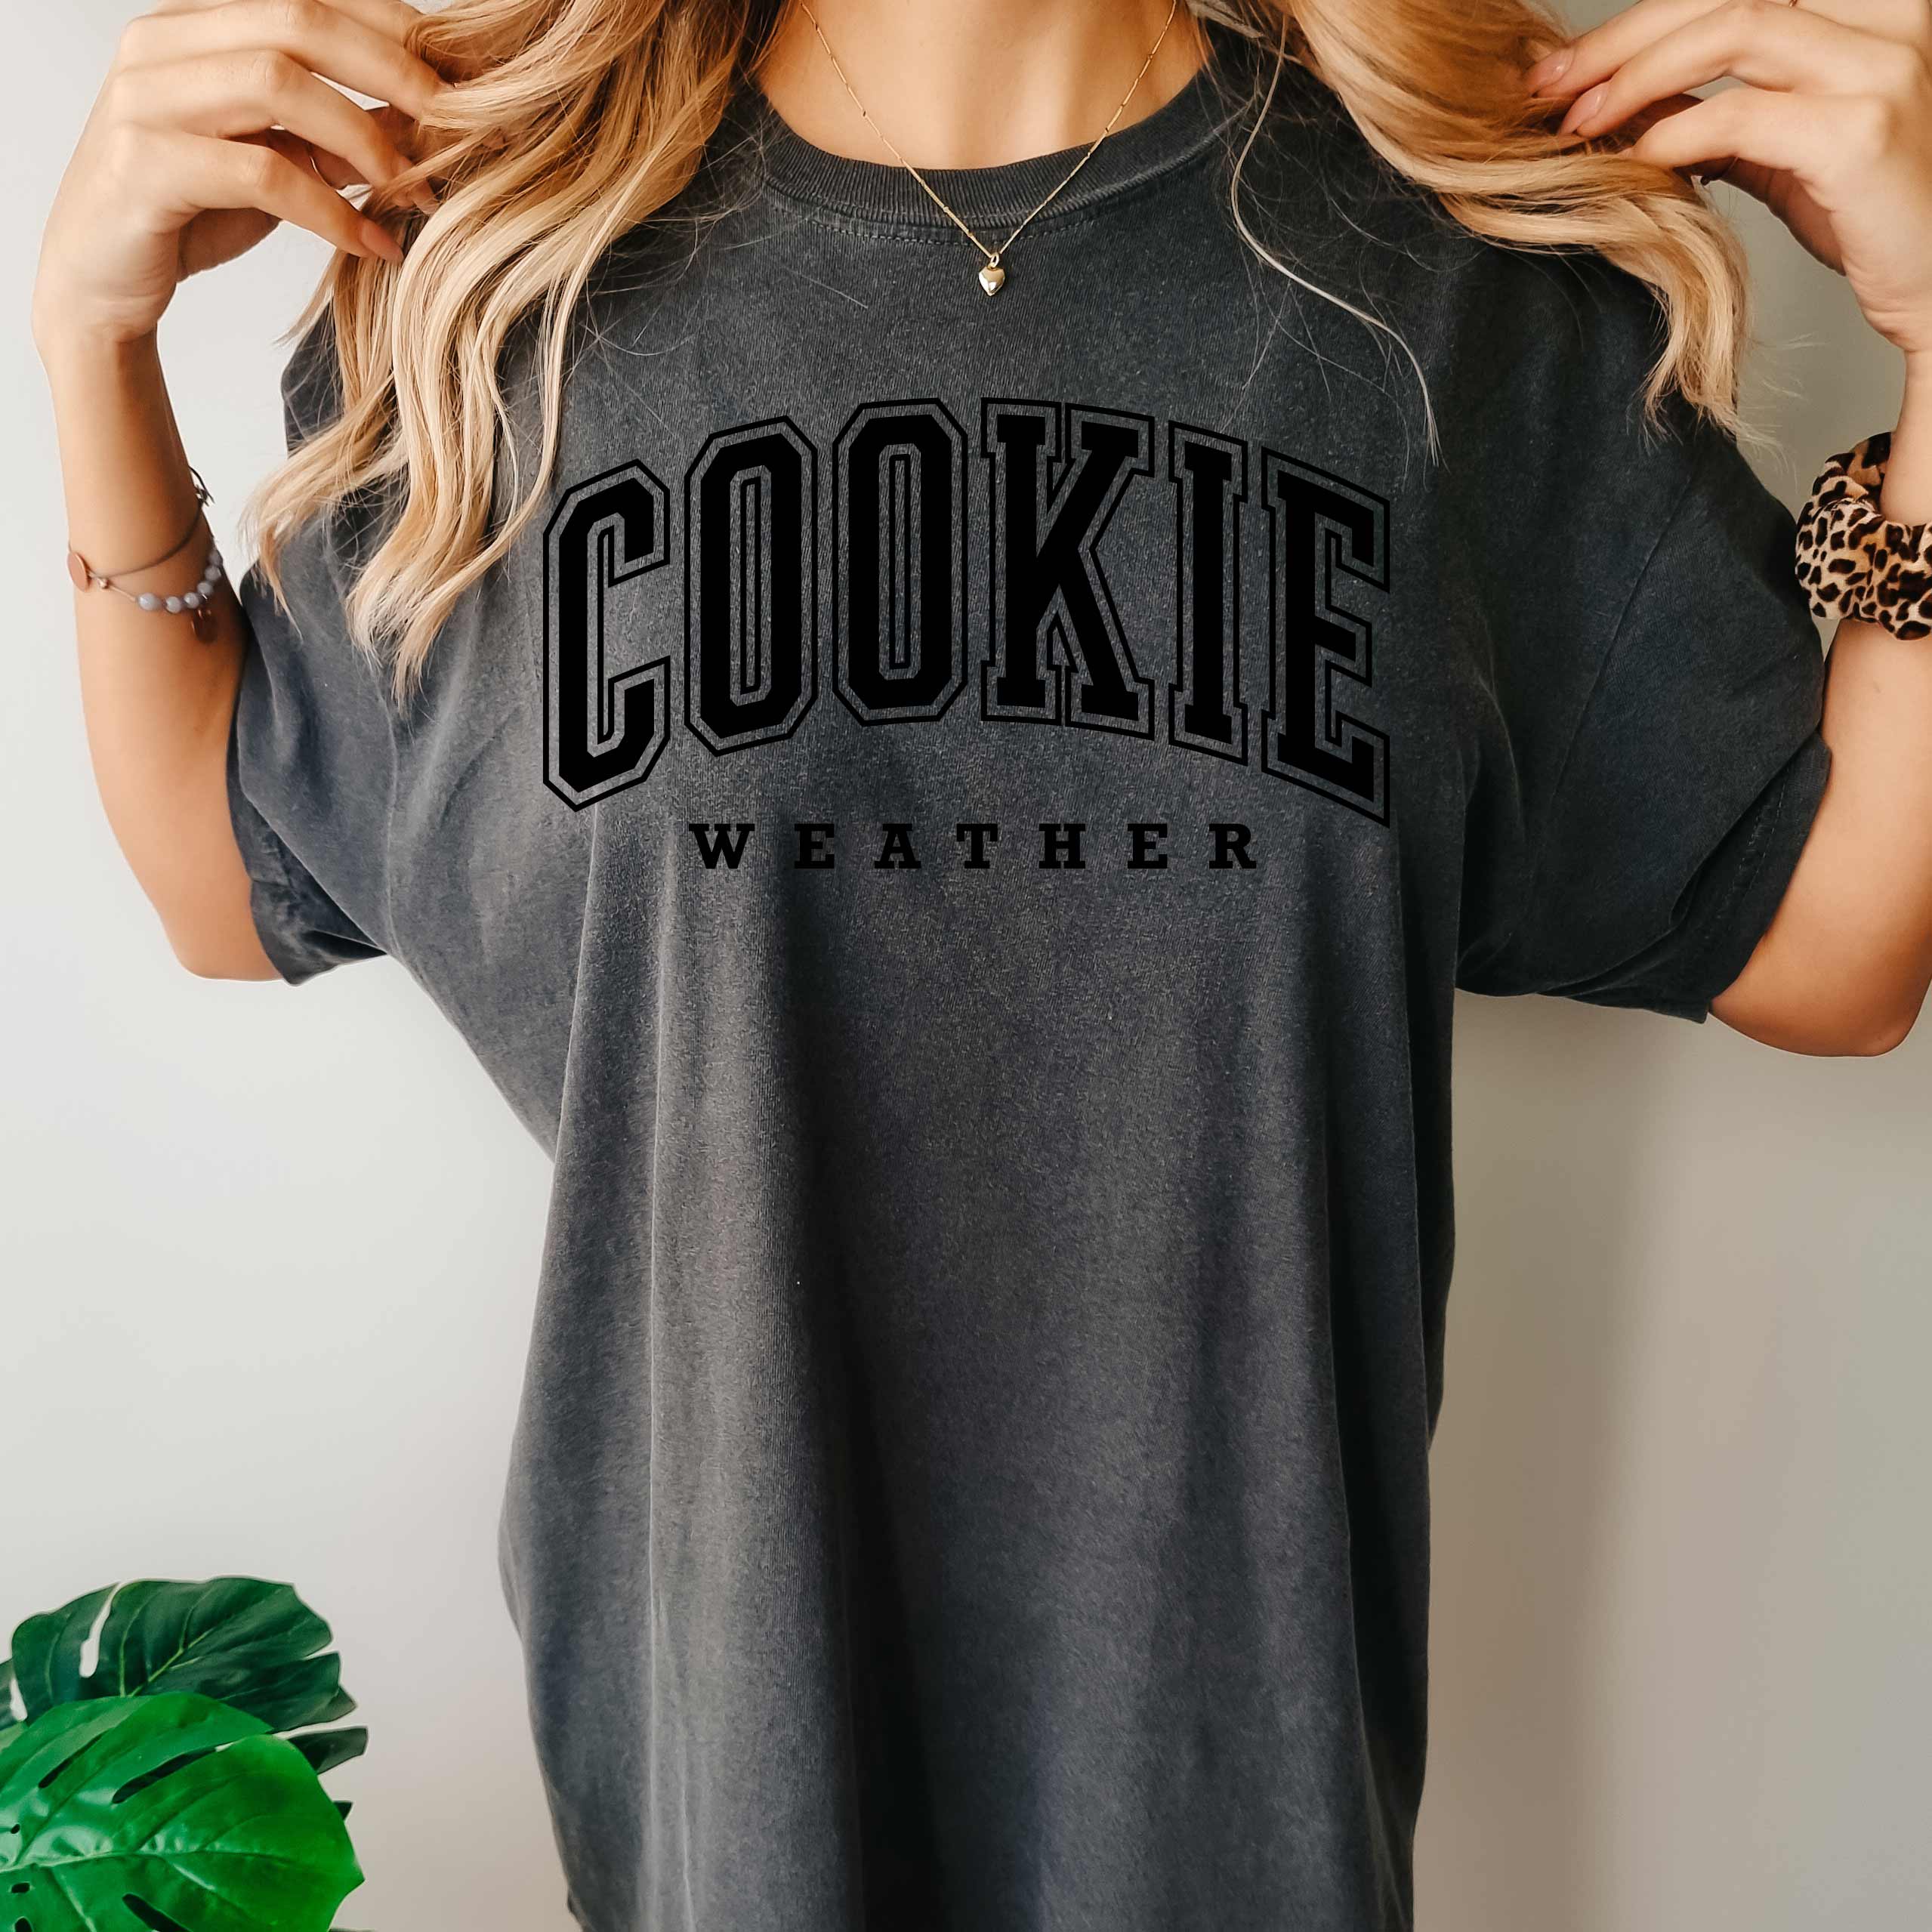 Cookie Weather Black Ink Unisex T-Shirt